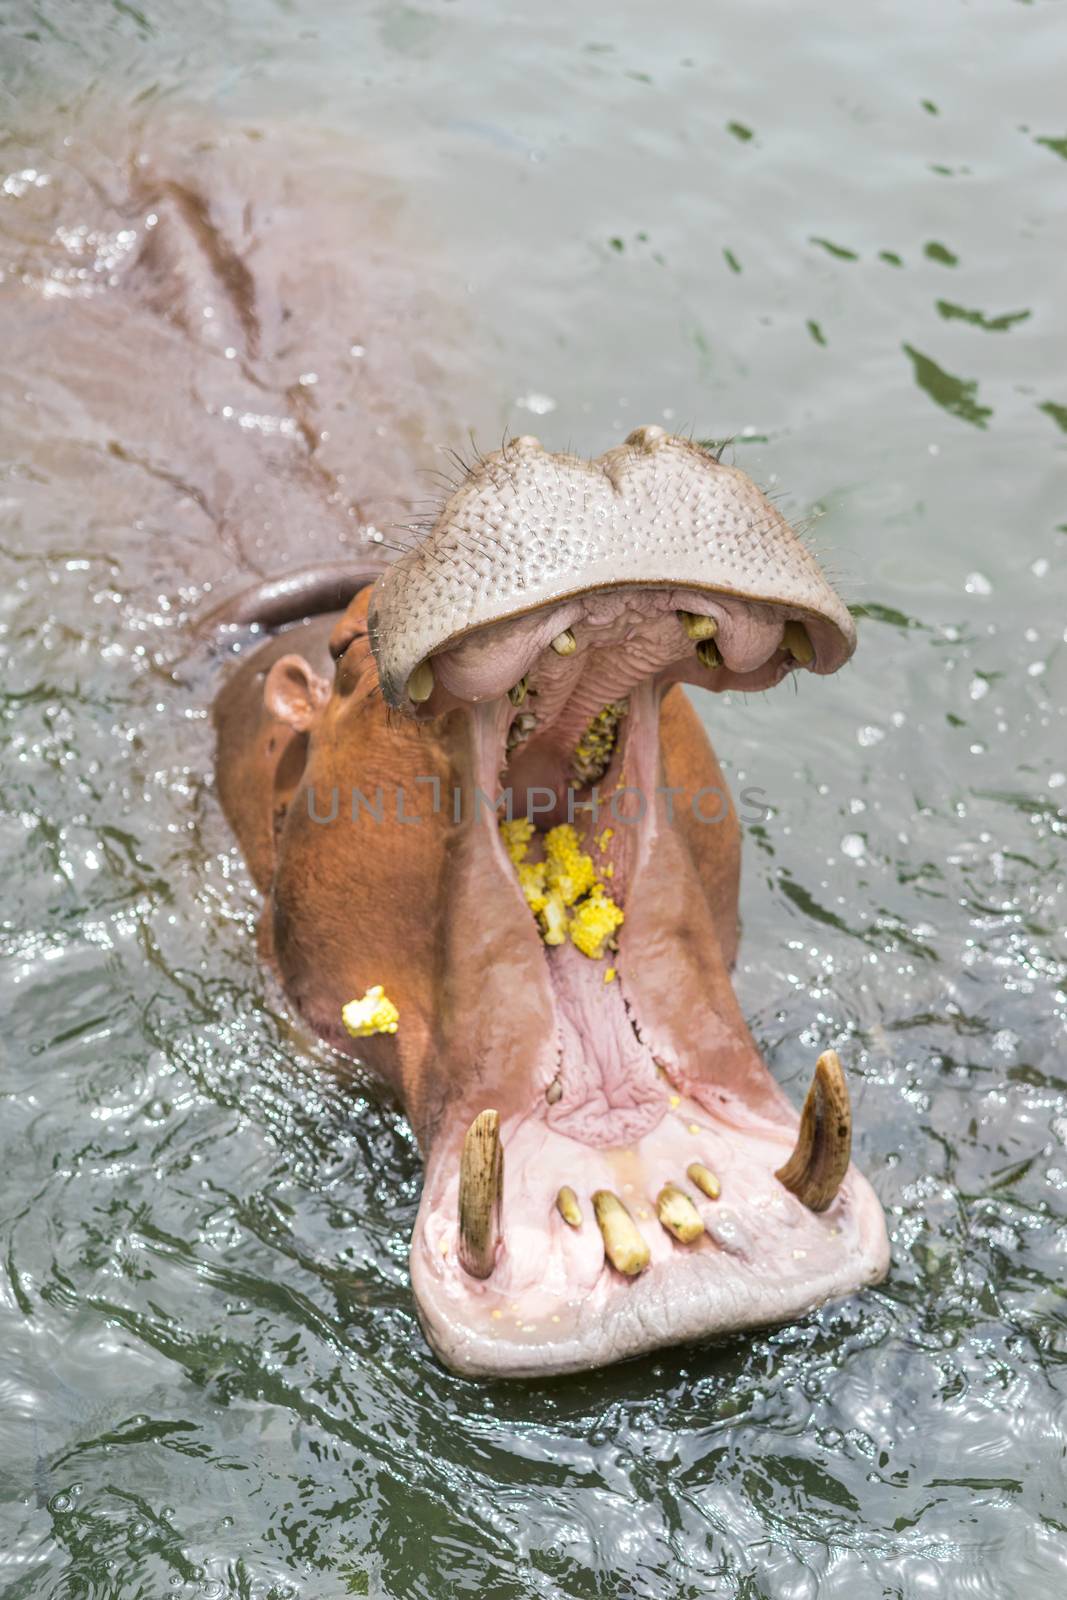 Hippopotamus wide open in the water by domonite